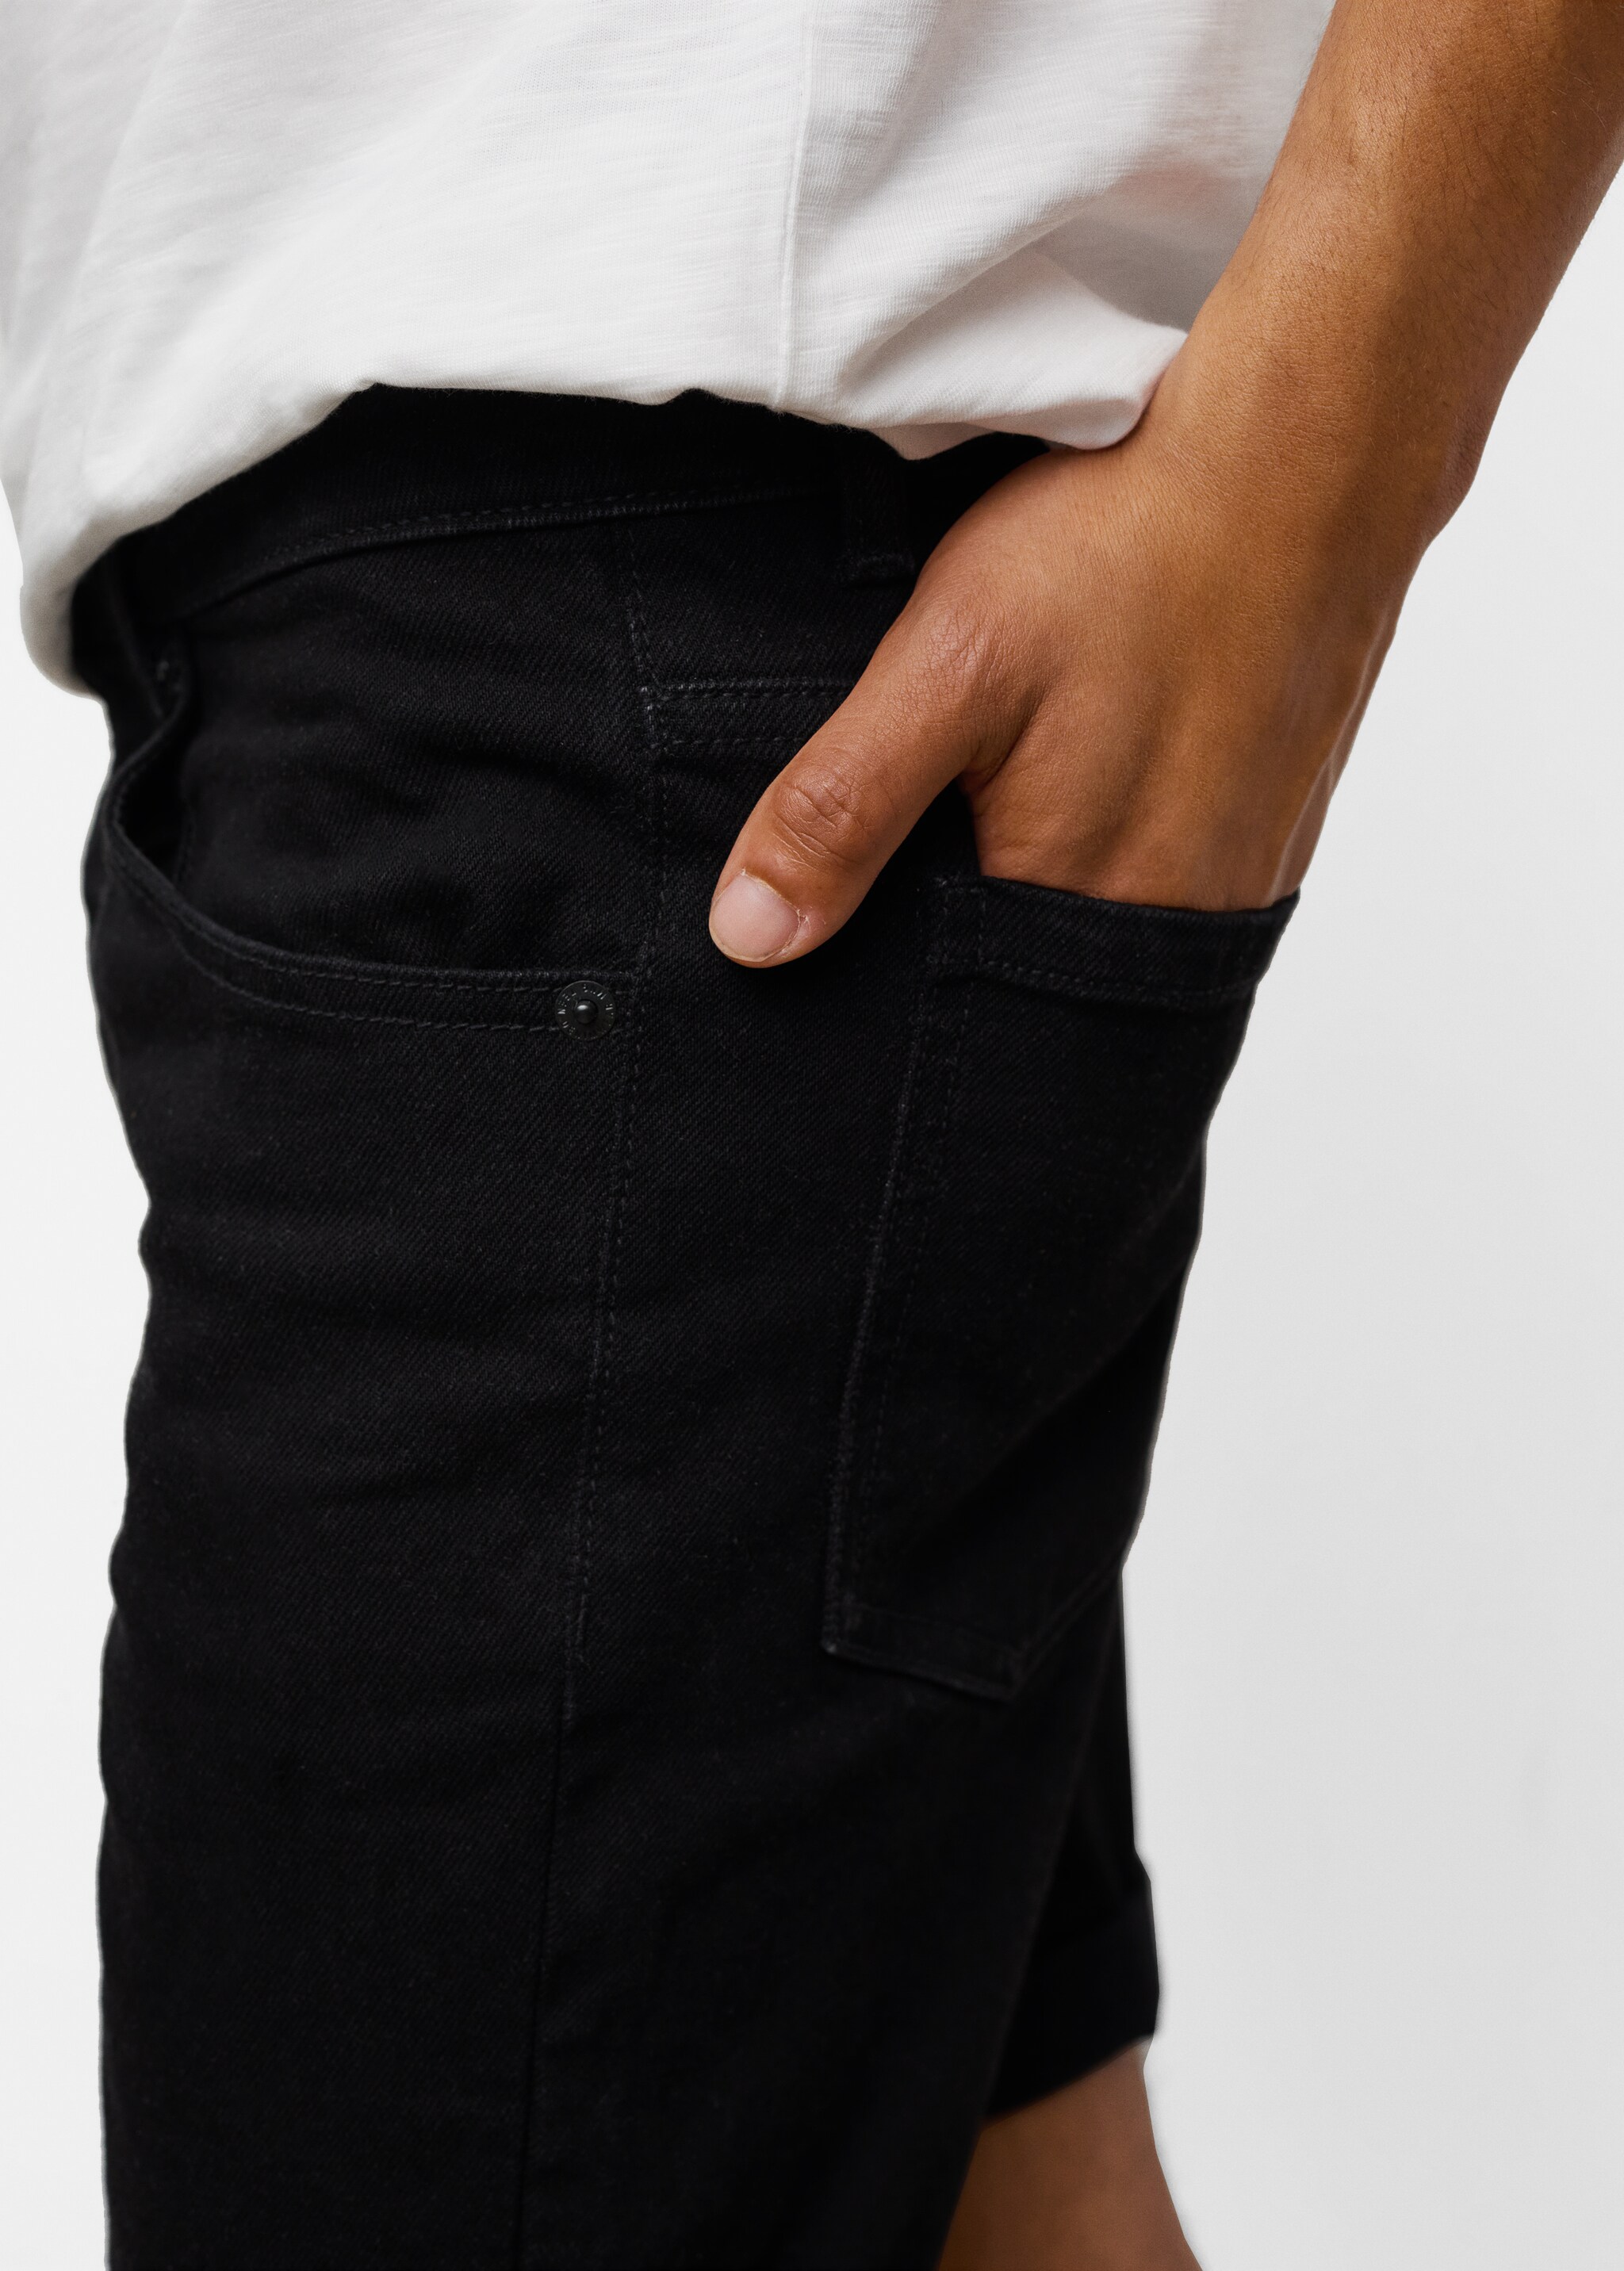 Cotton denim shorts - Details of the article 2